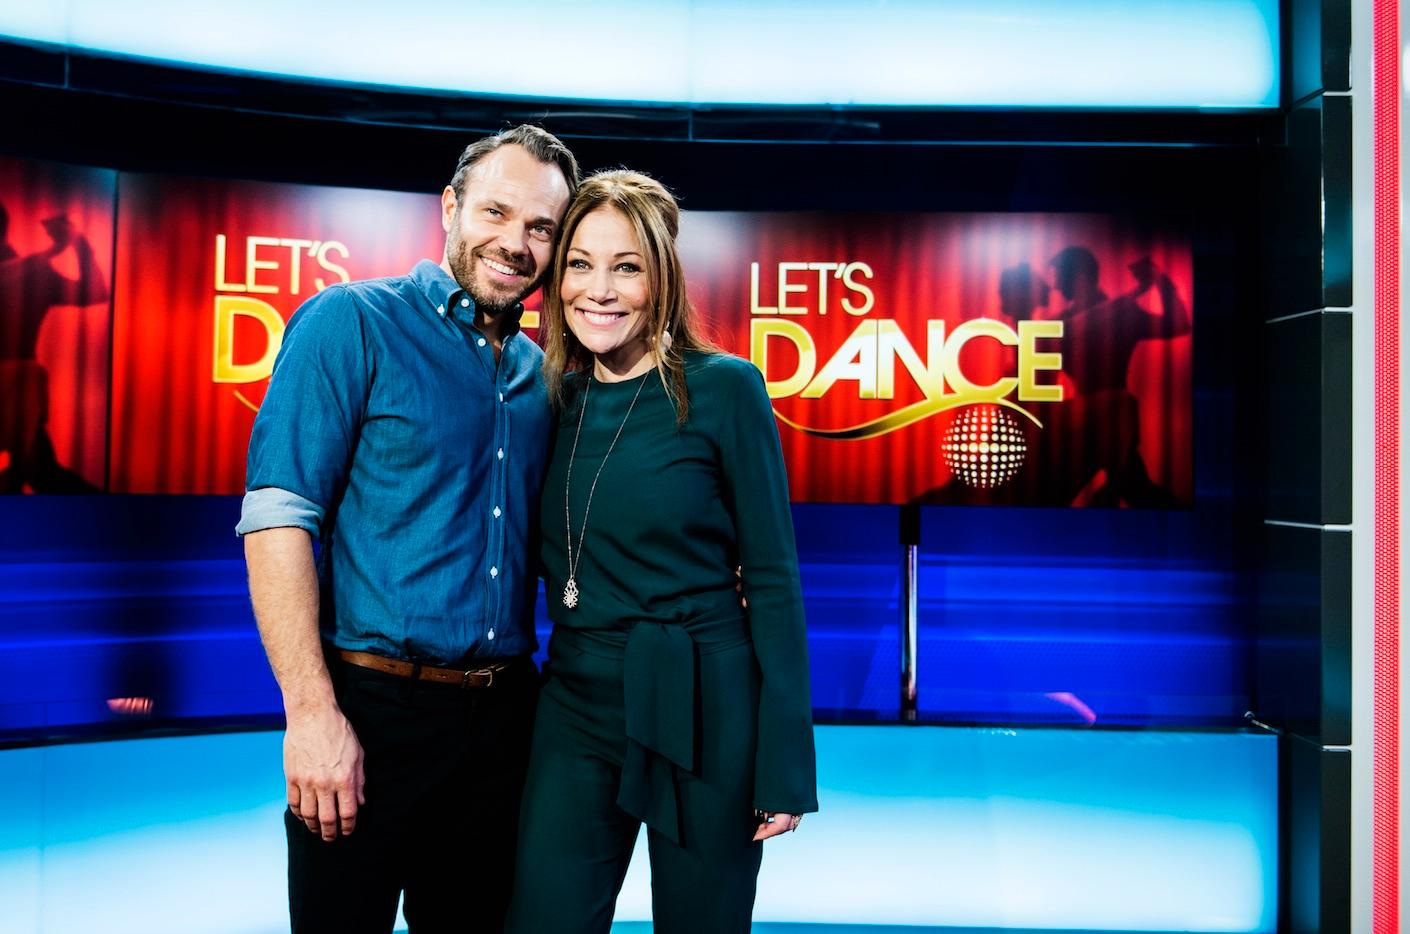 David Hellenius och Tilde de Paula Eby leder årets ”Let's dance” i TV4.